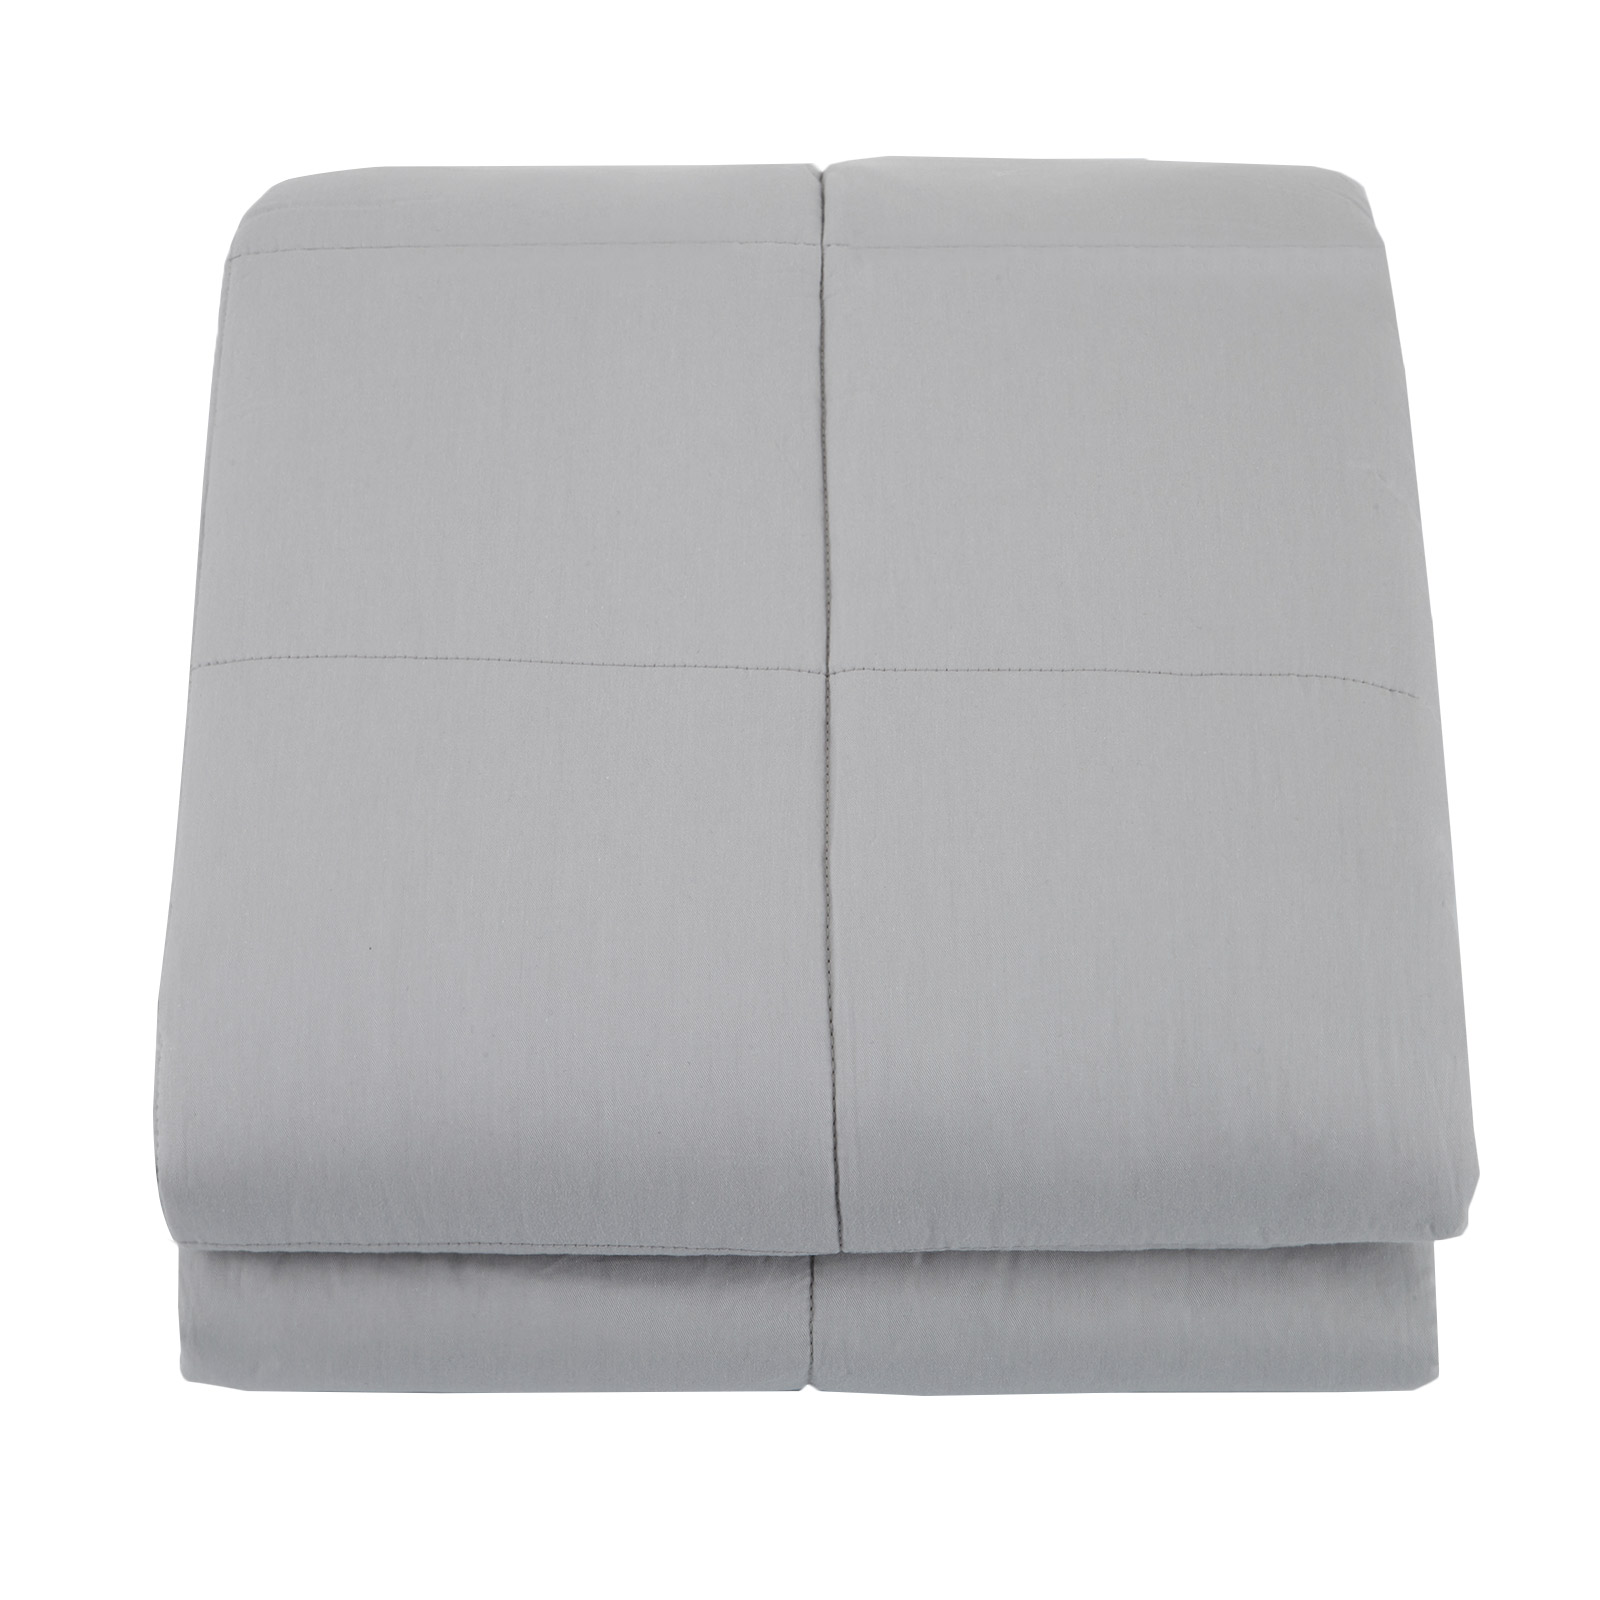 7.7KG Cotton Weighted Blanket Kid Adult Deep Sleep Relax Heavy Gravity